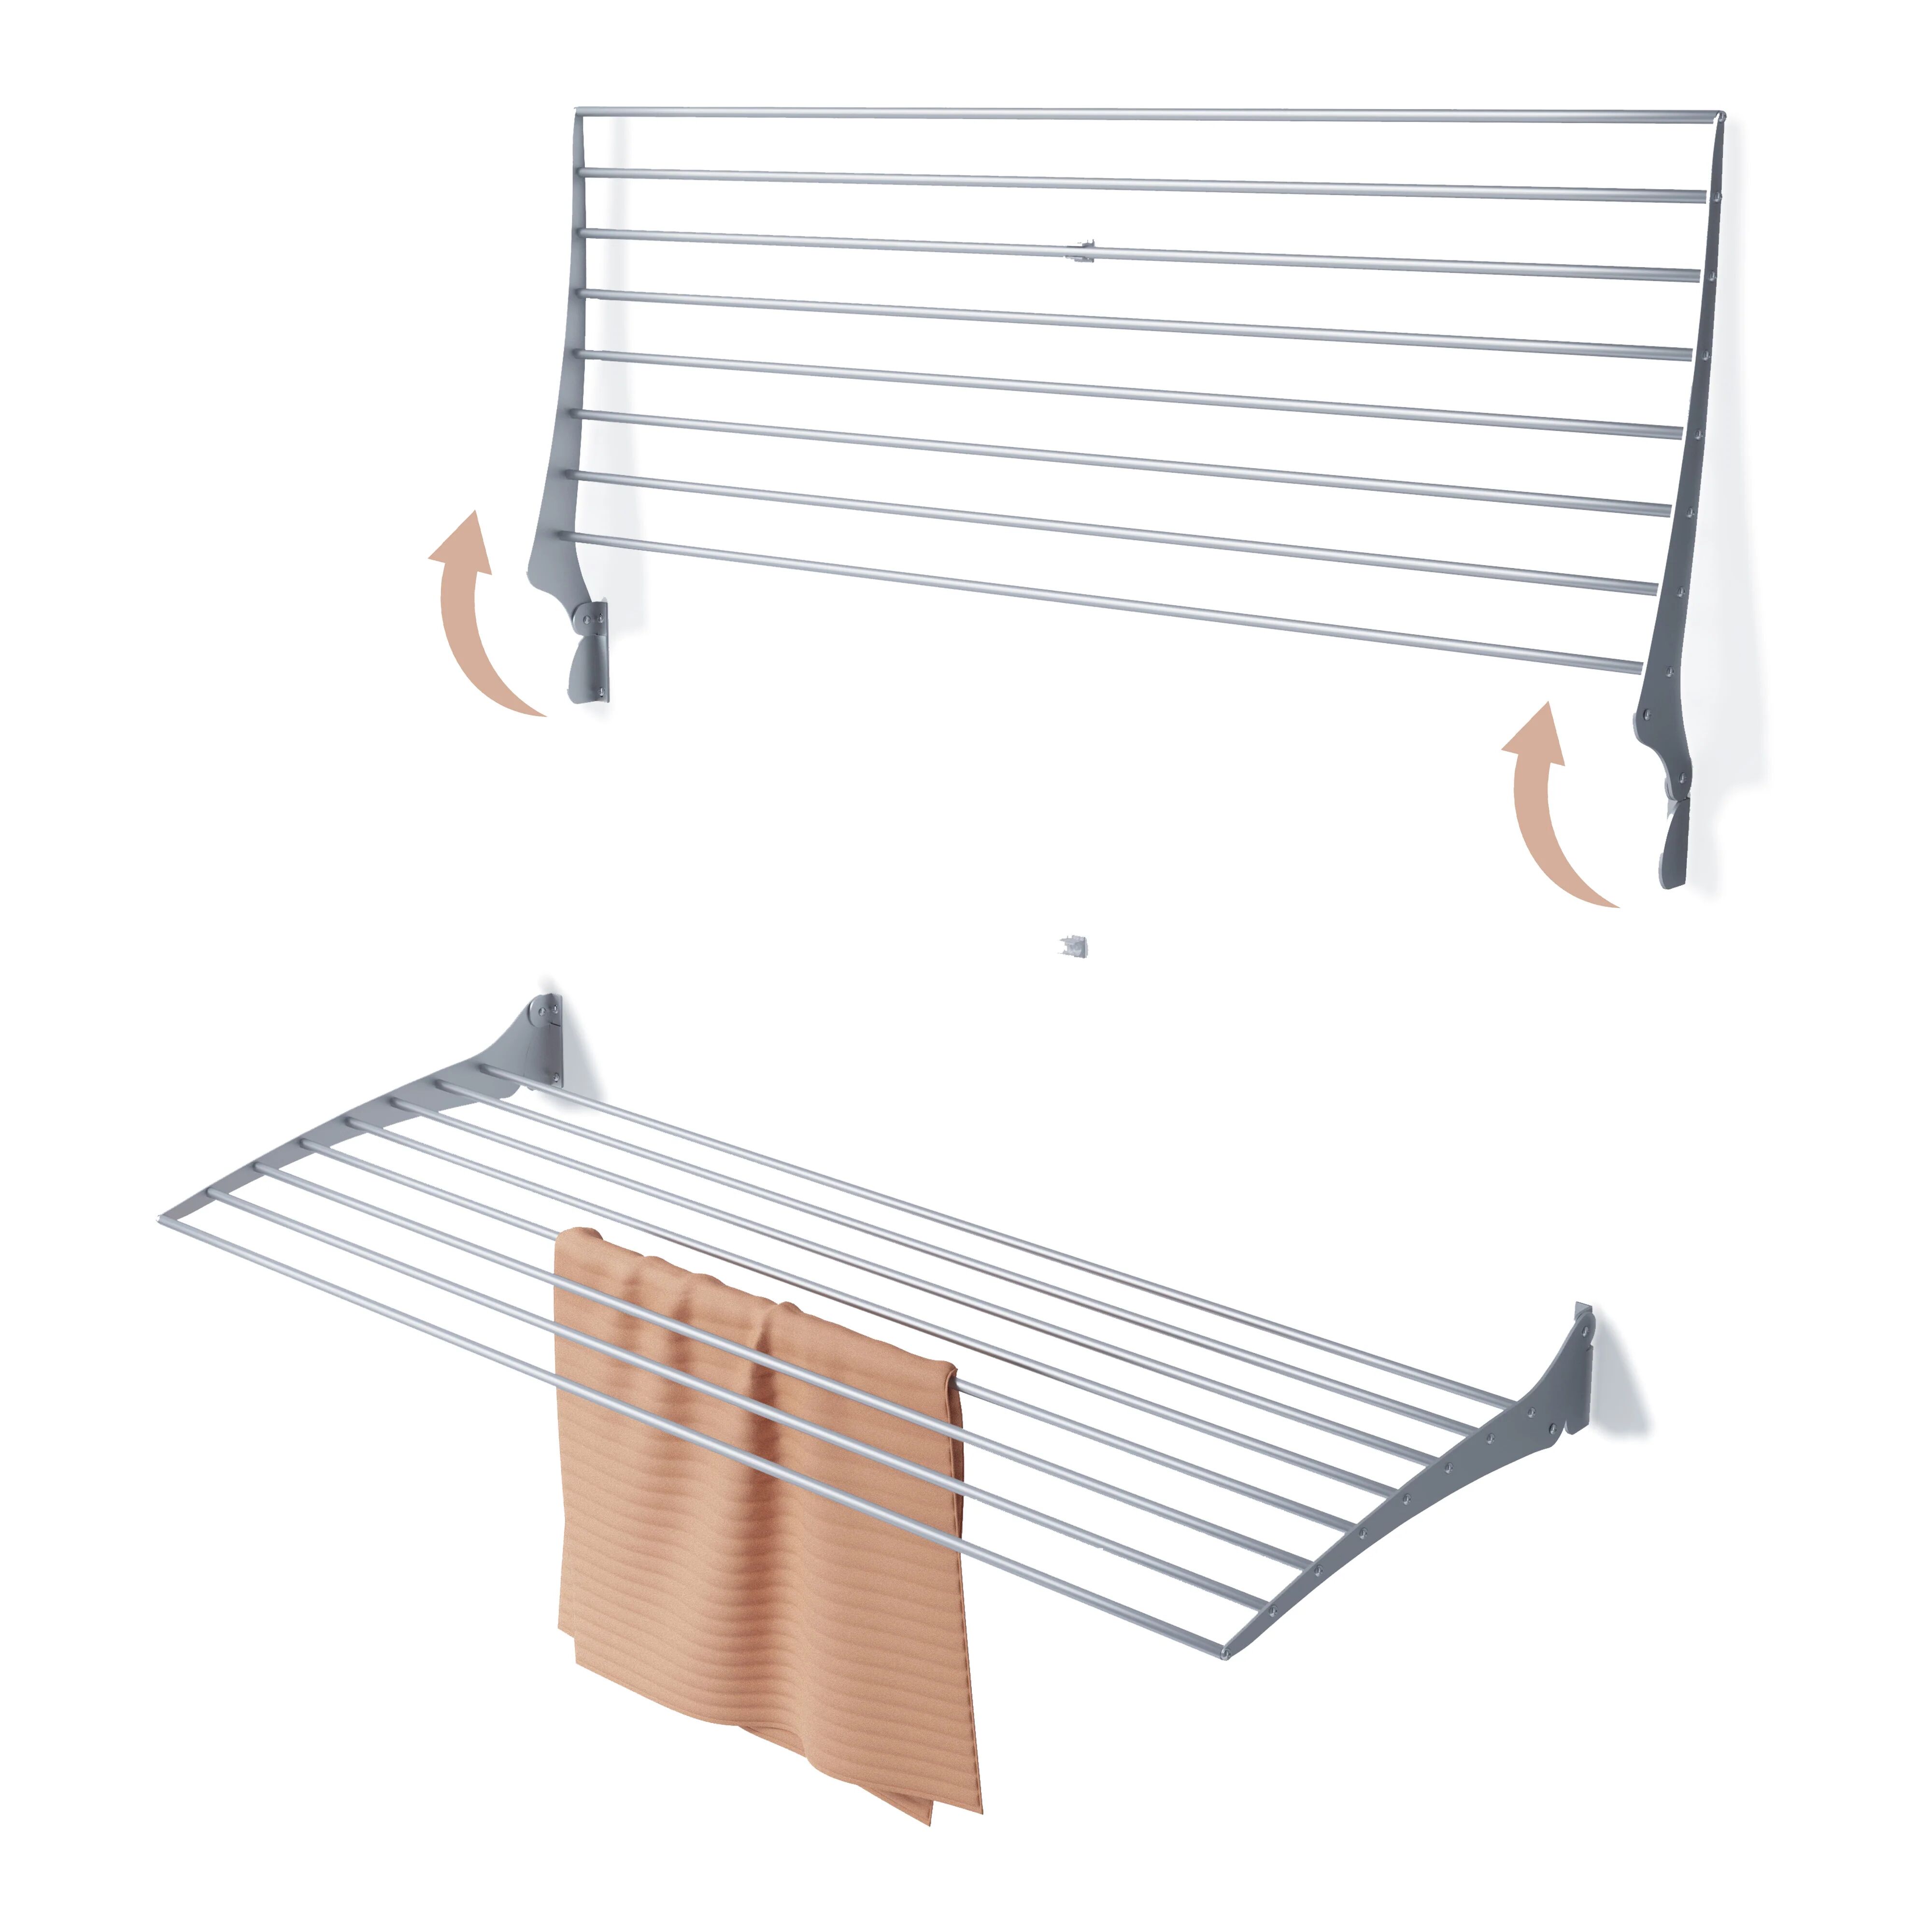 Foxydry Fold 80 wall-mounted space-saving drying rack (FOLD-80)